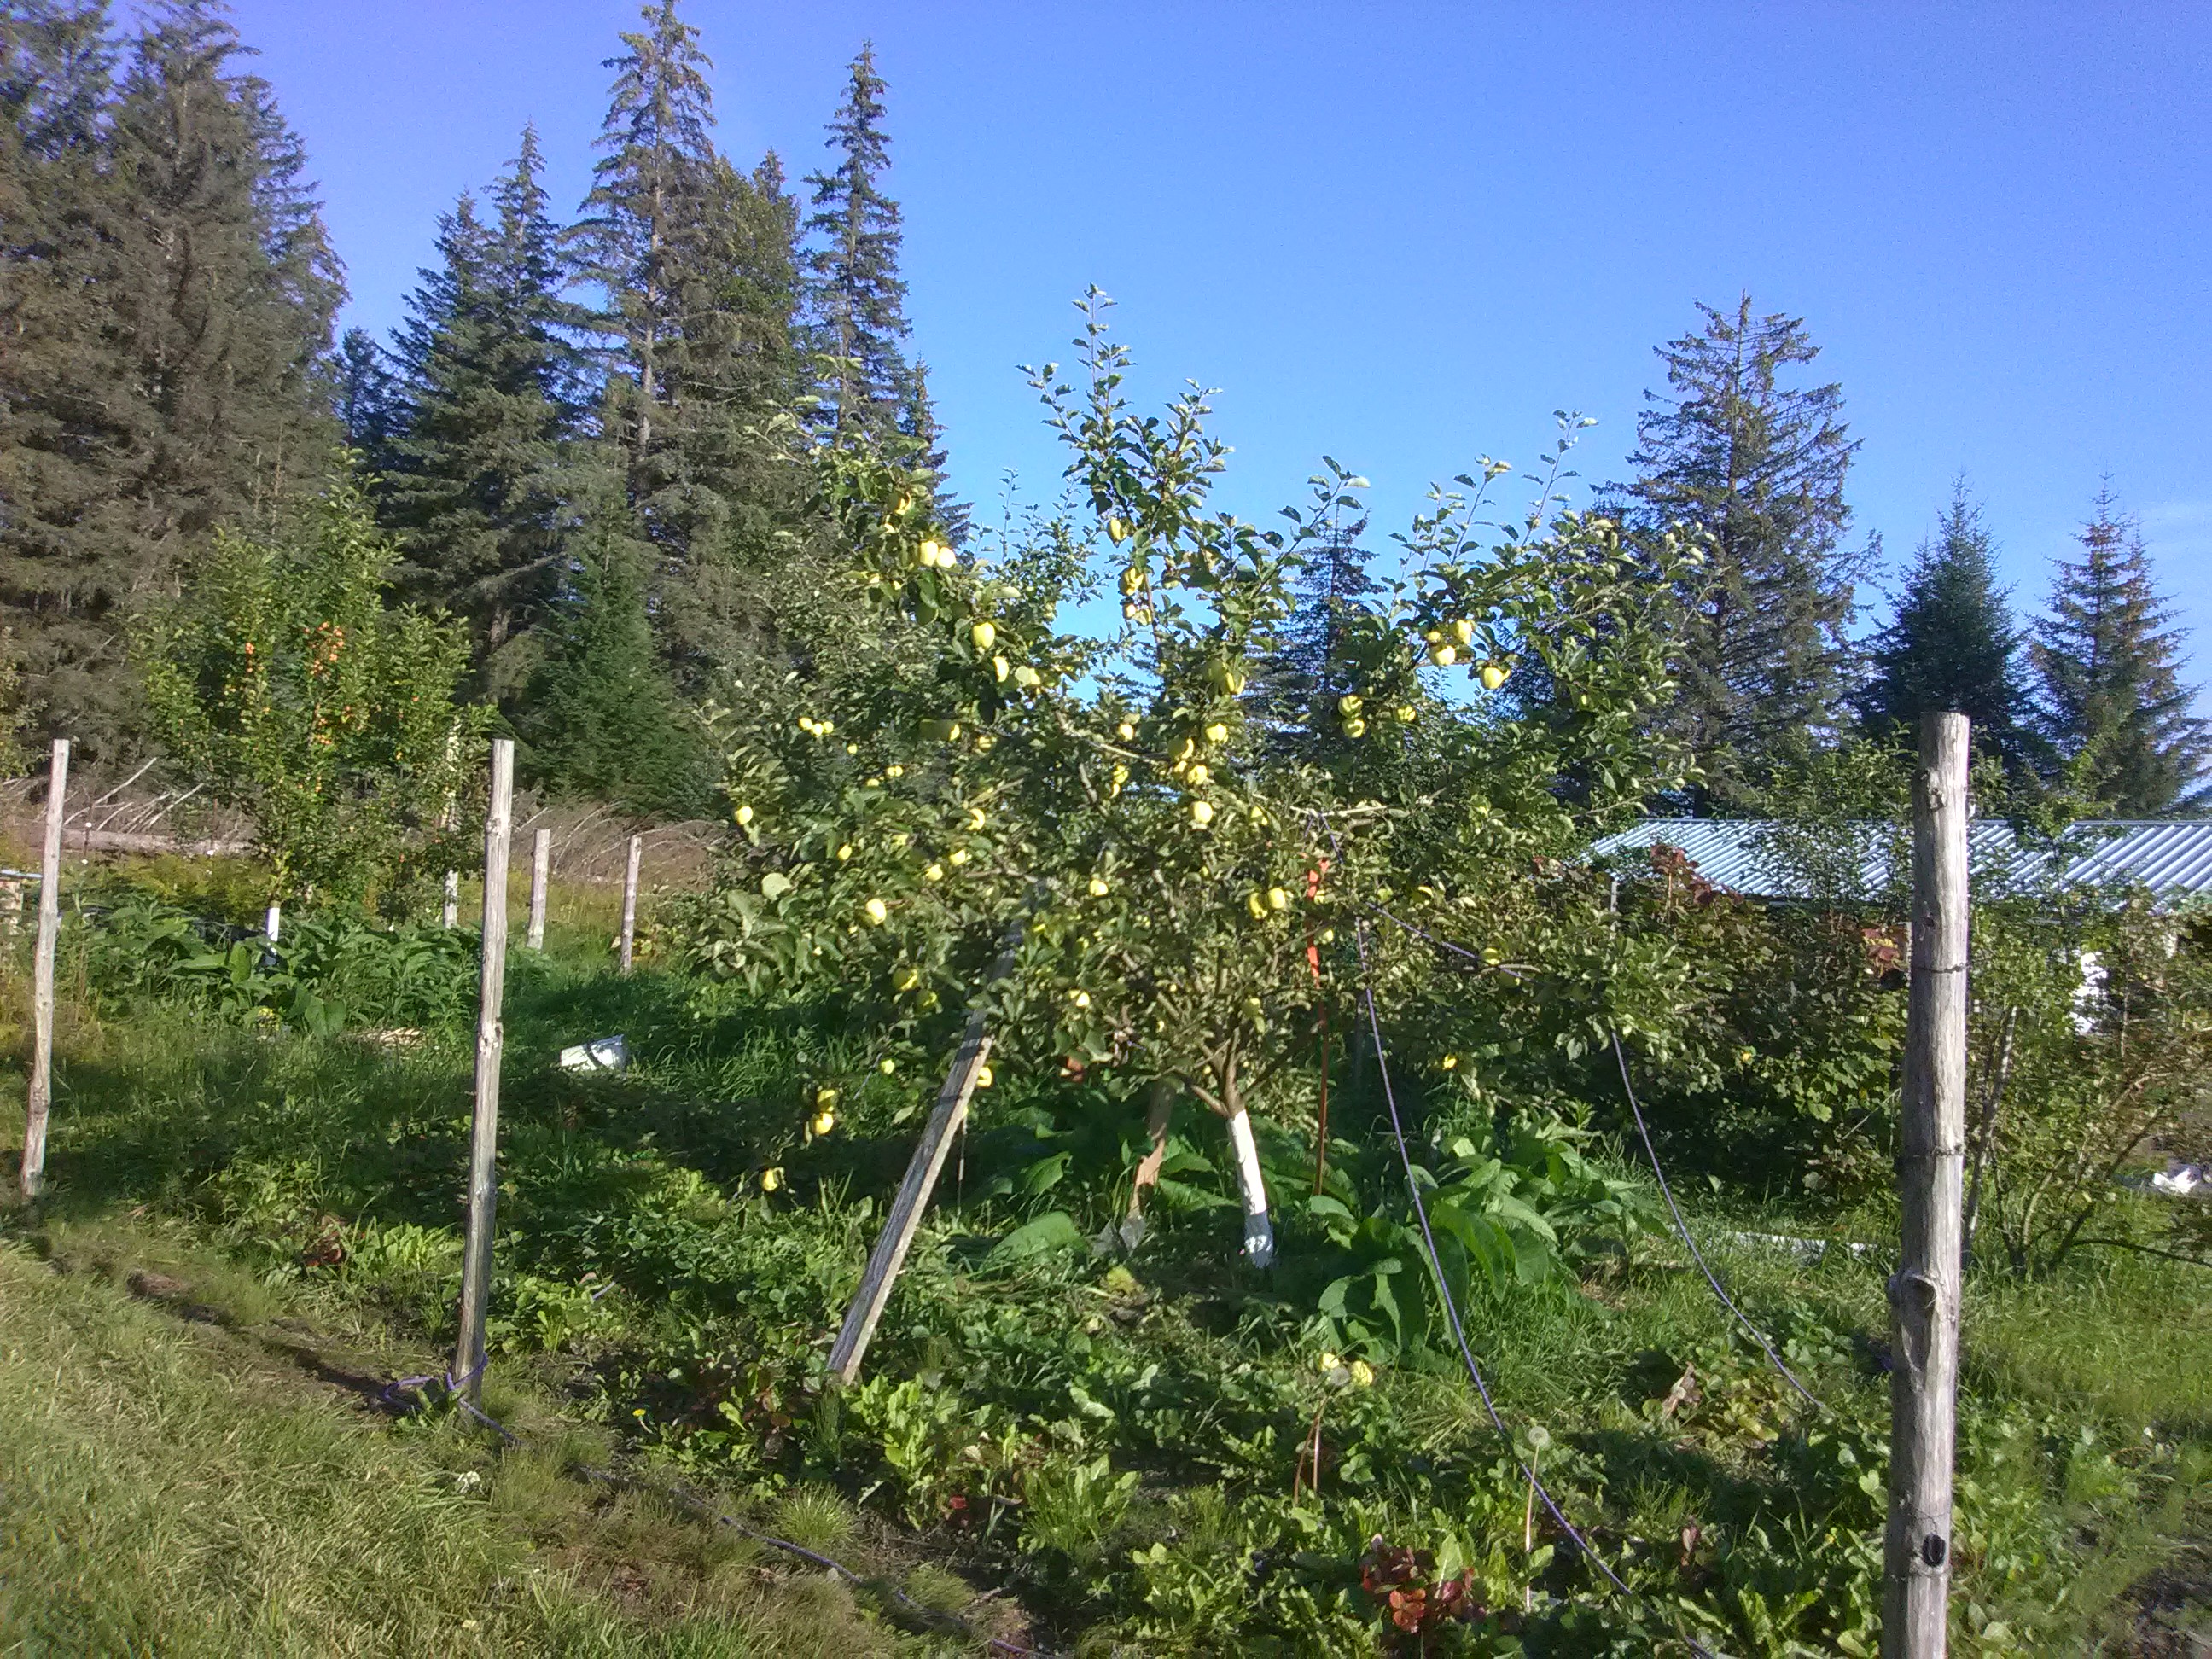 Alaska Grown apples